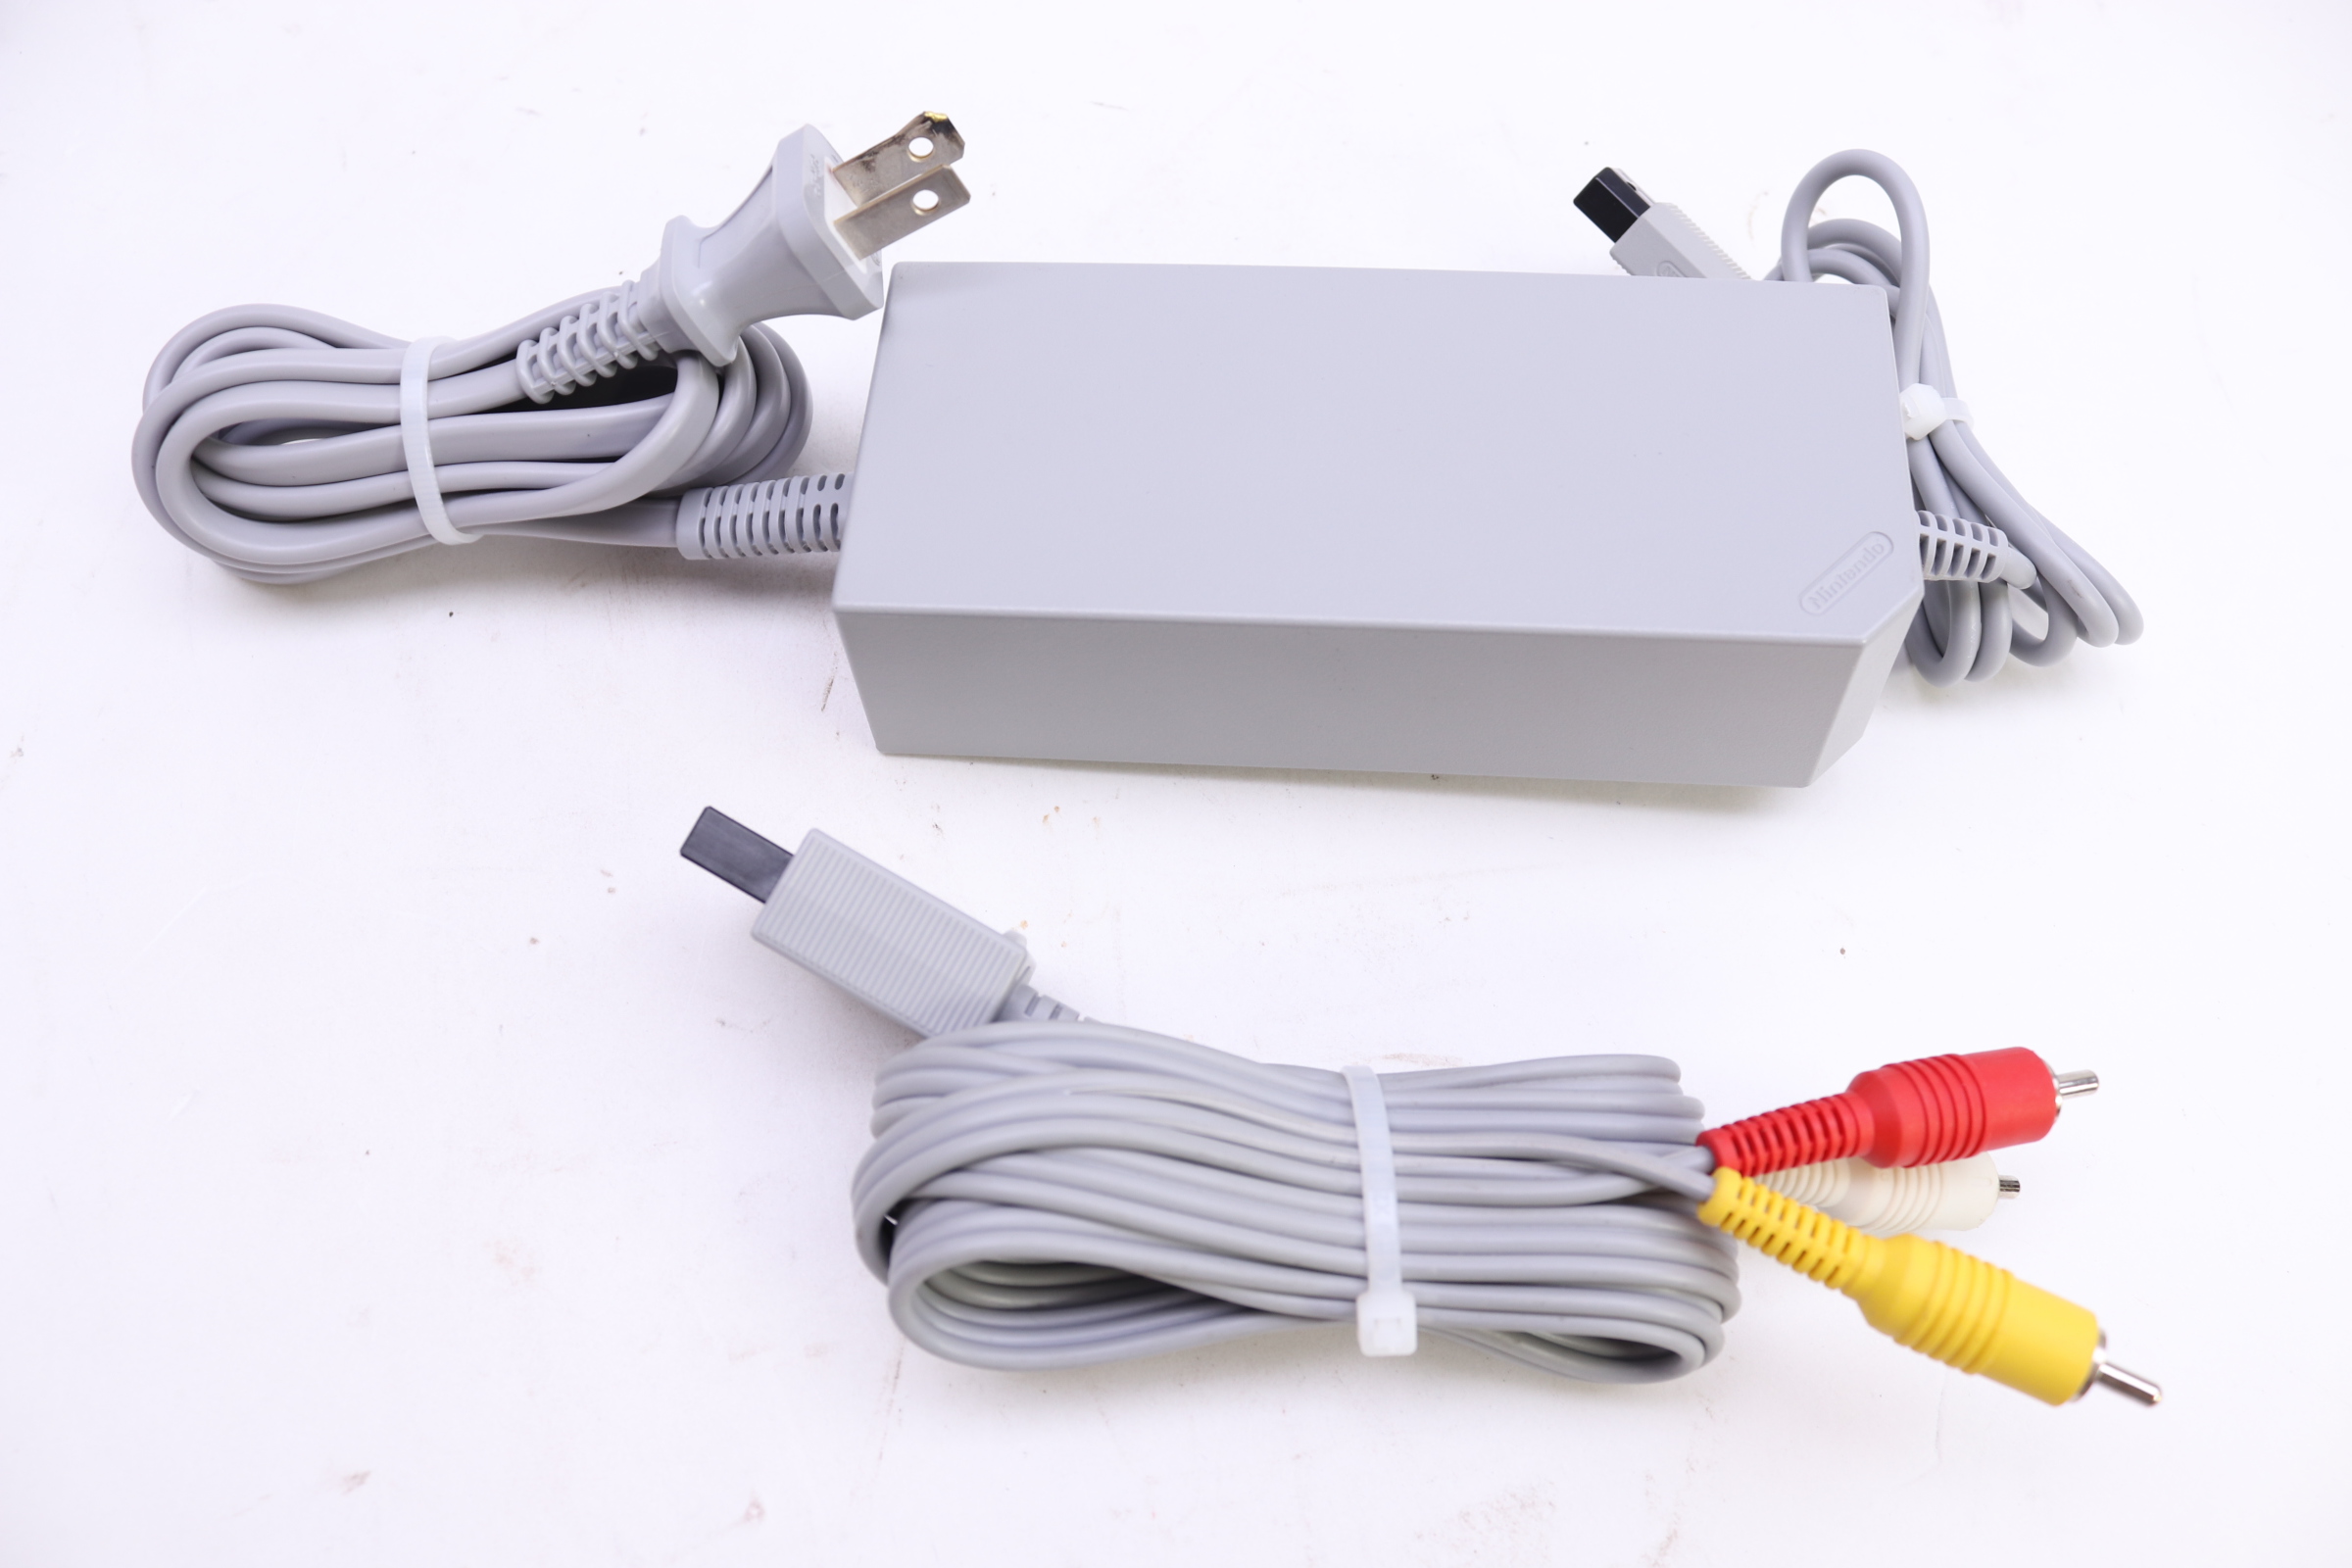 Videogame Nintendo Wii Branco Rvl001 +controle +cabos Cod069